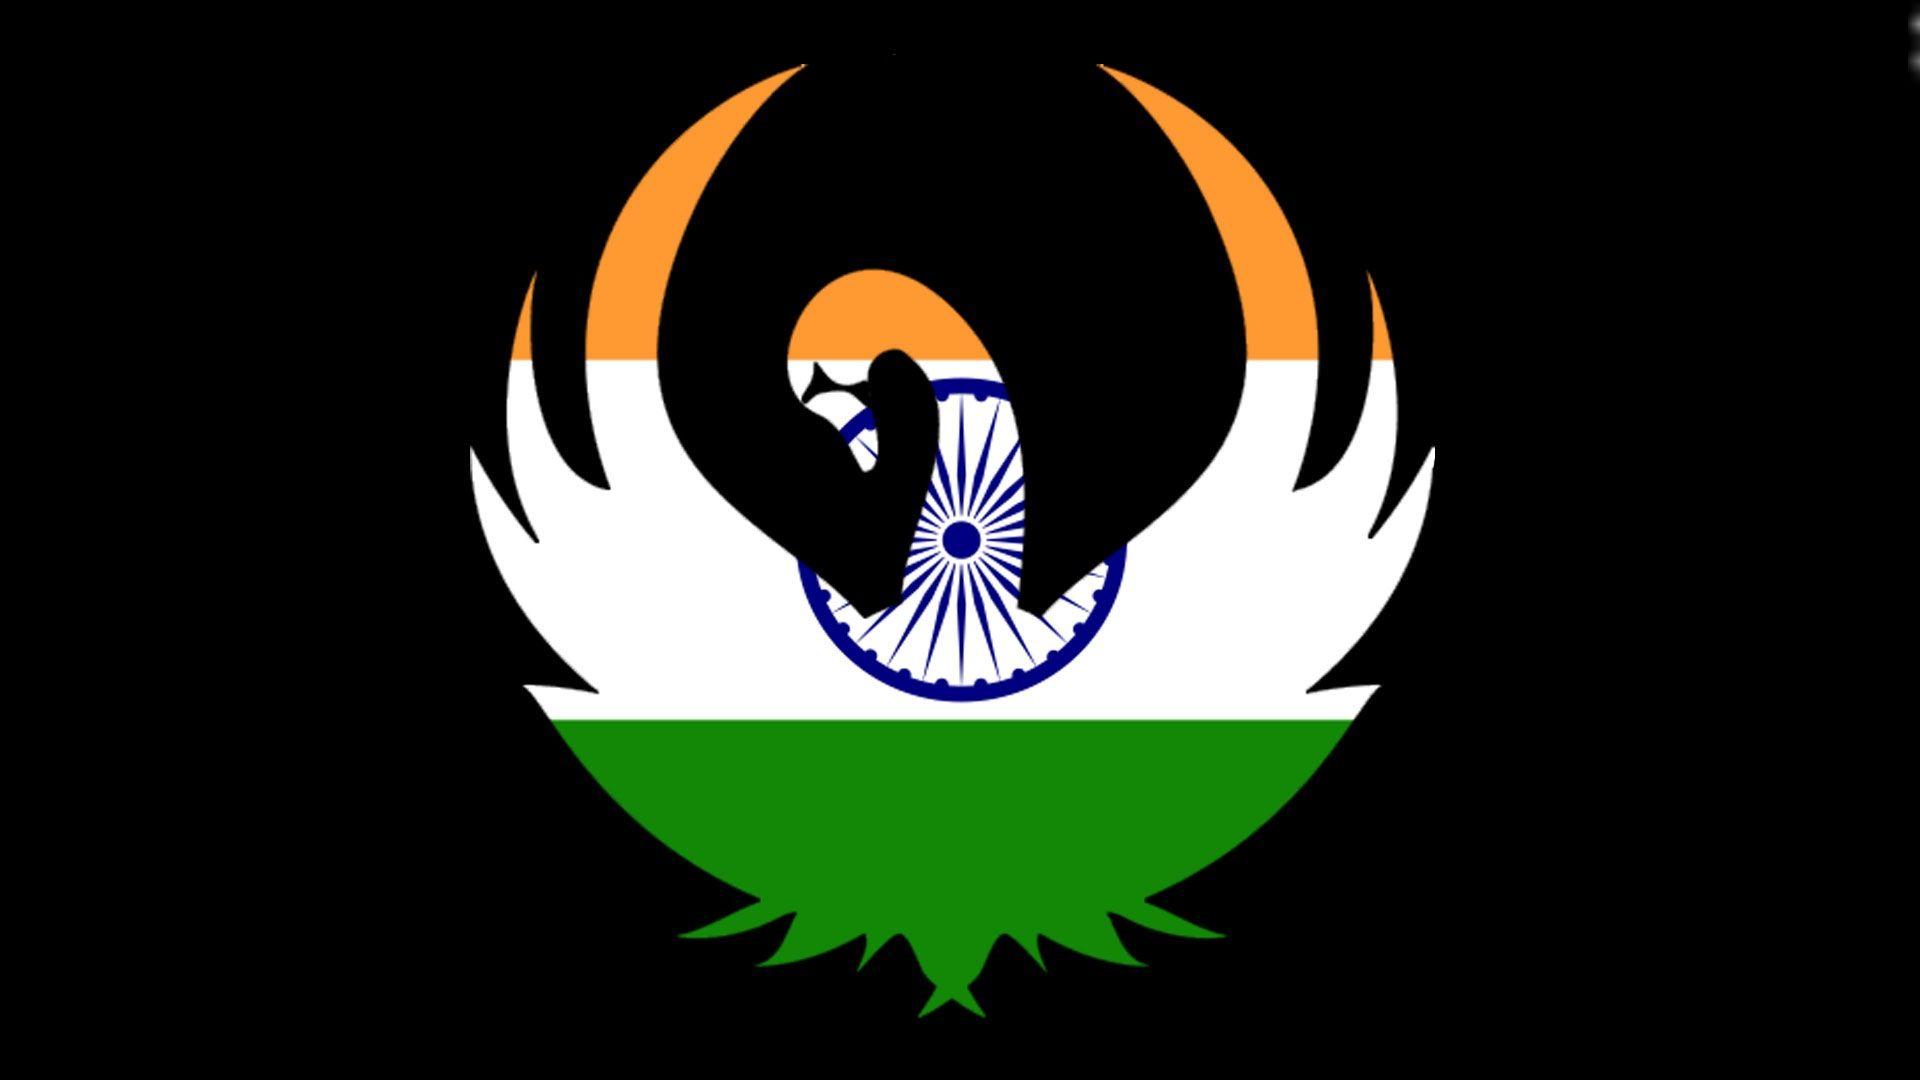 India flag in bird shape on black background. HD Wallpaper Rocks